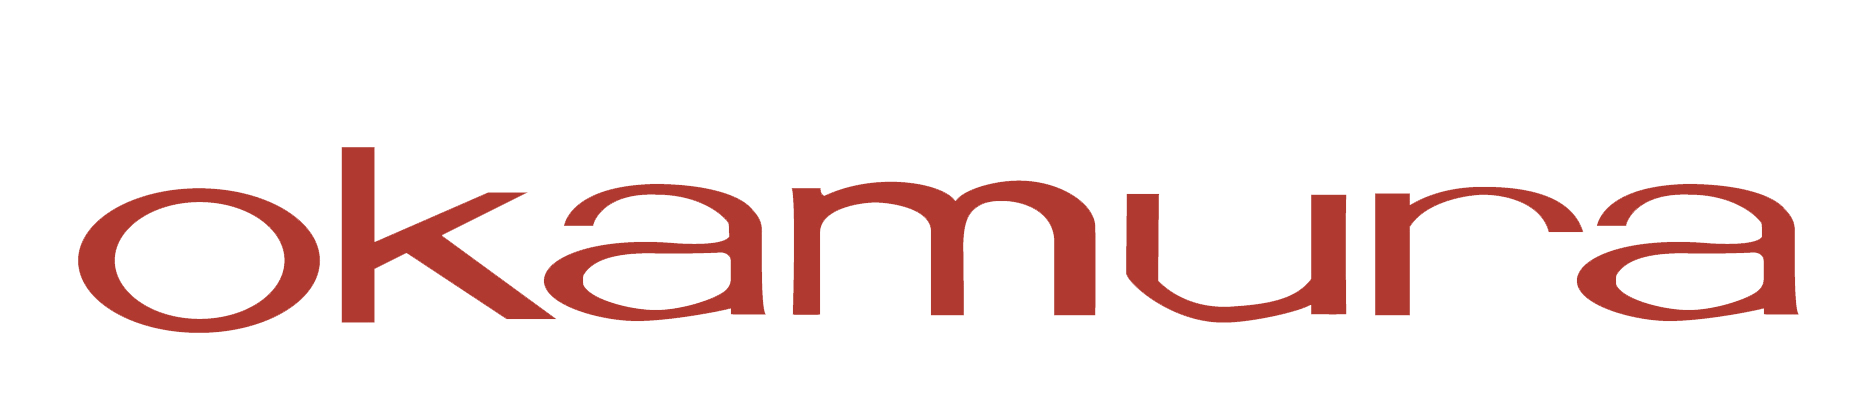 Okamura Logo photo - 1